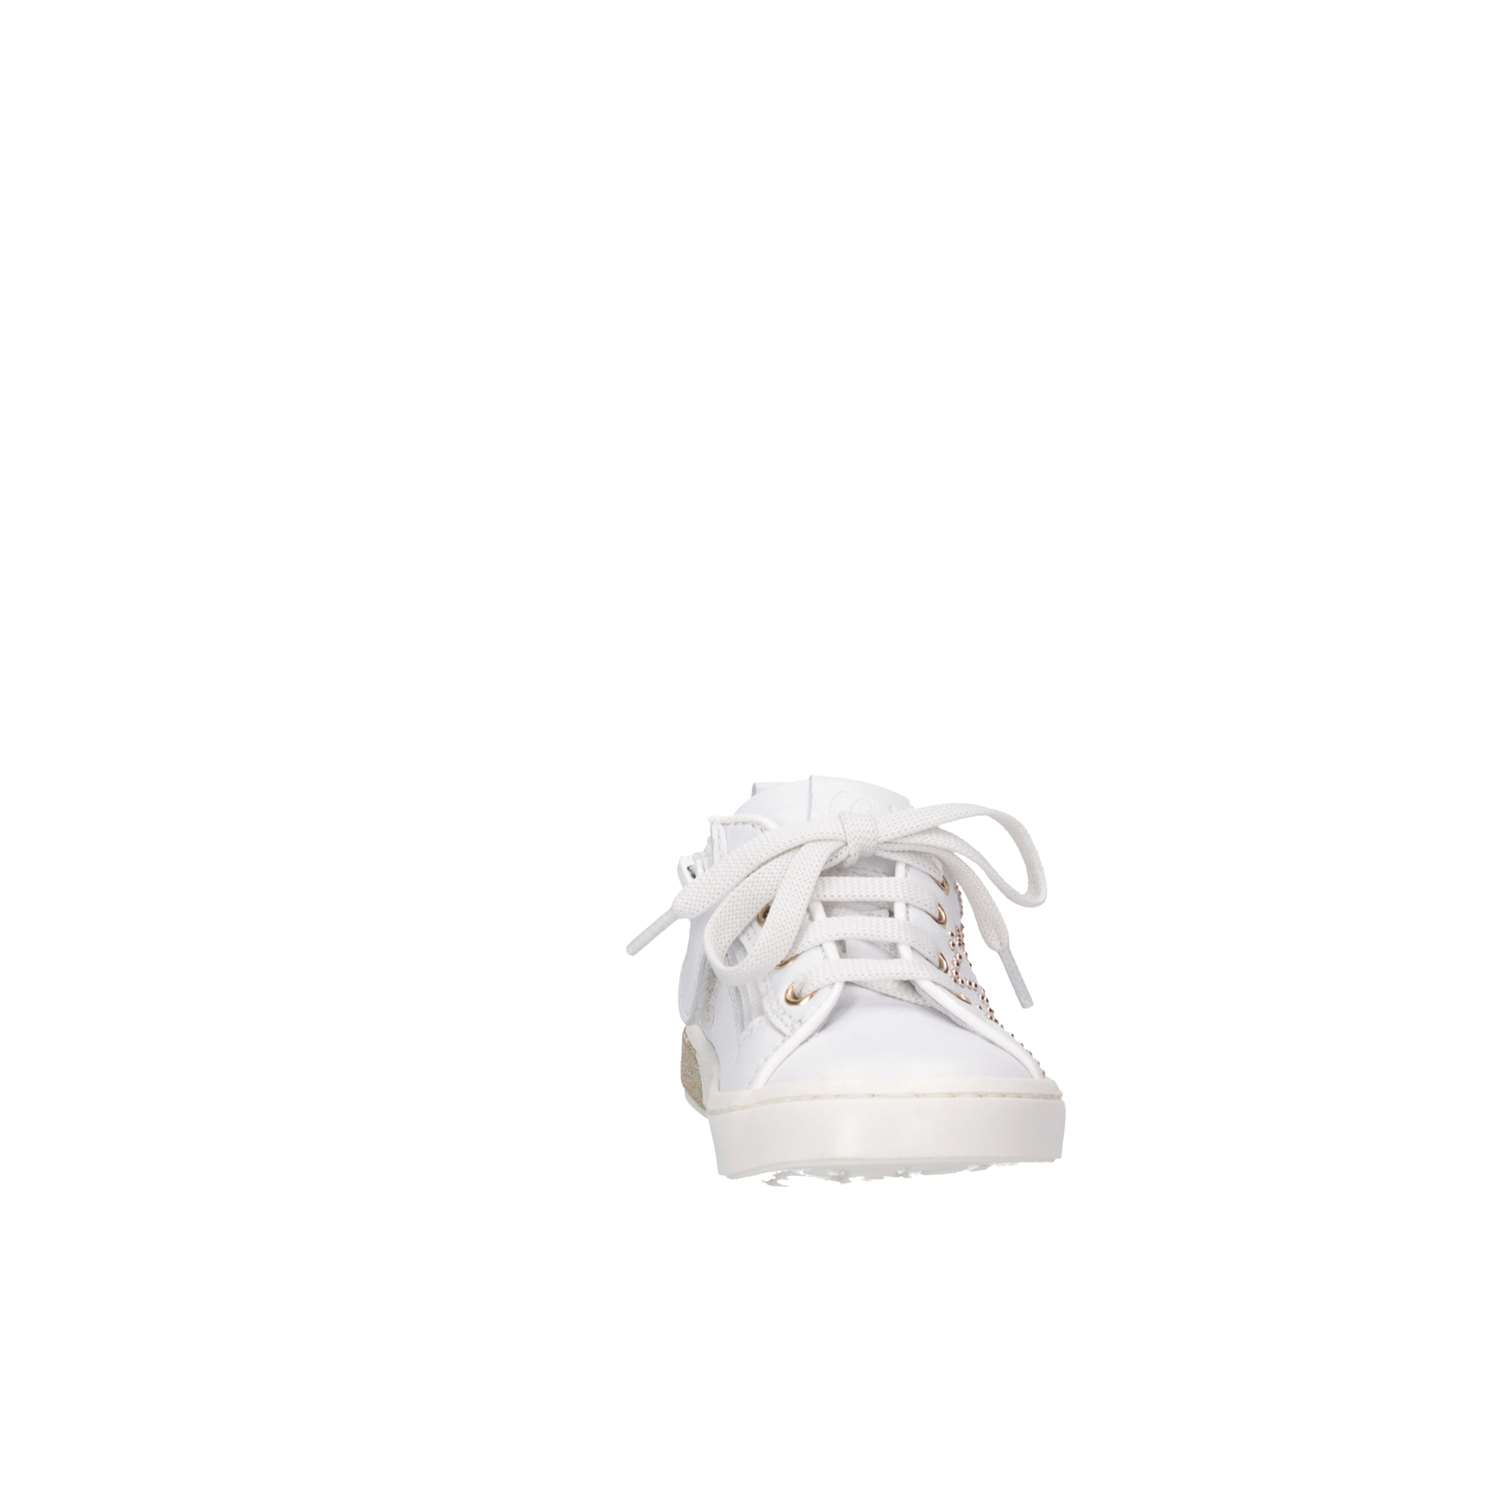 Romagnoli 3360-126 BIANCO White Shoes Child 